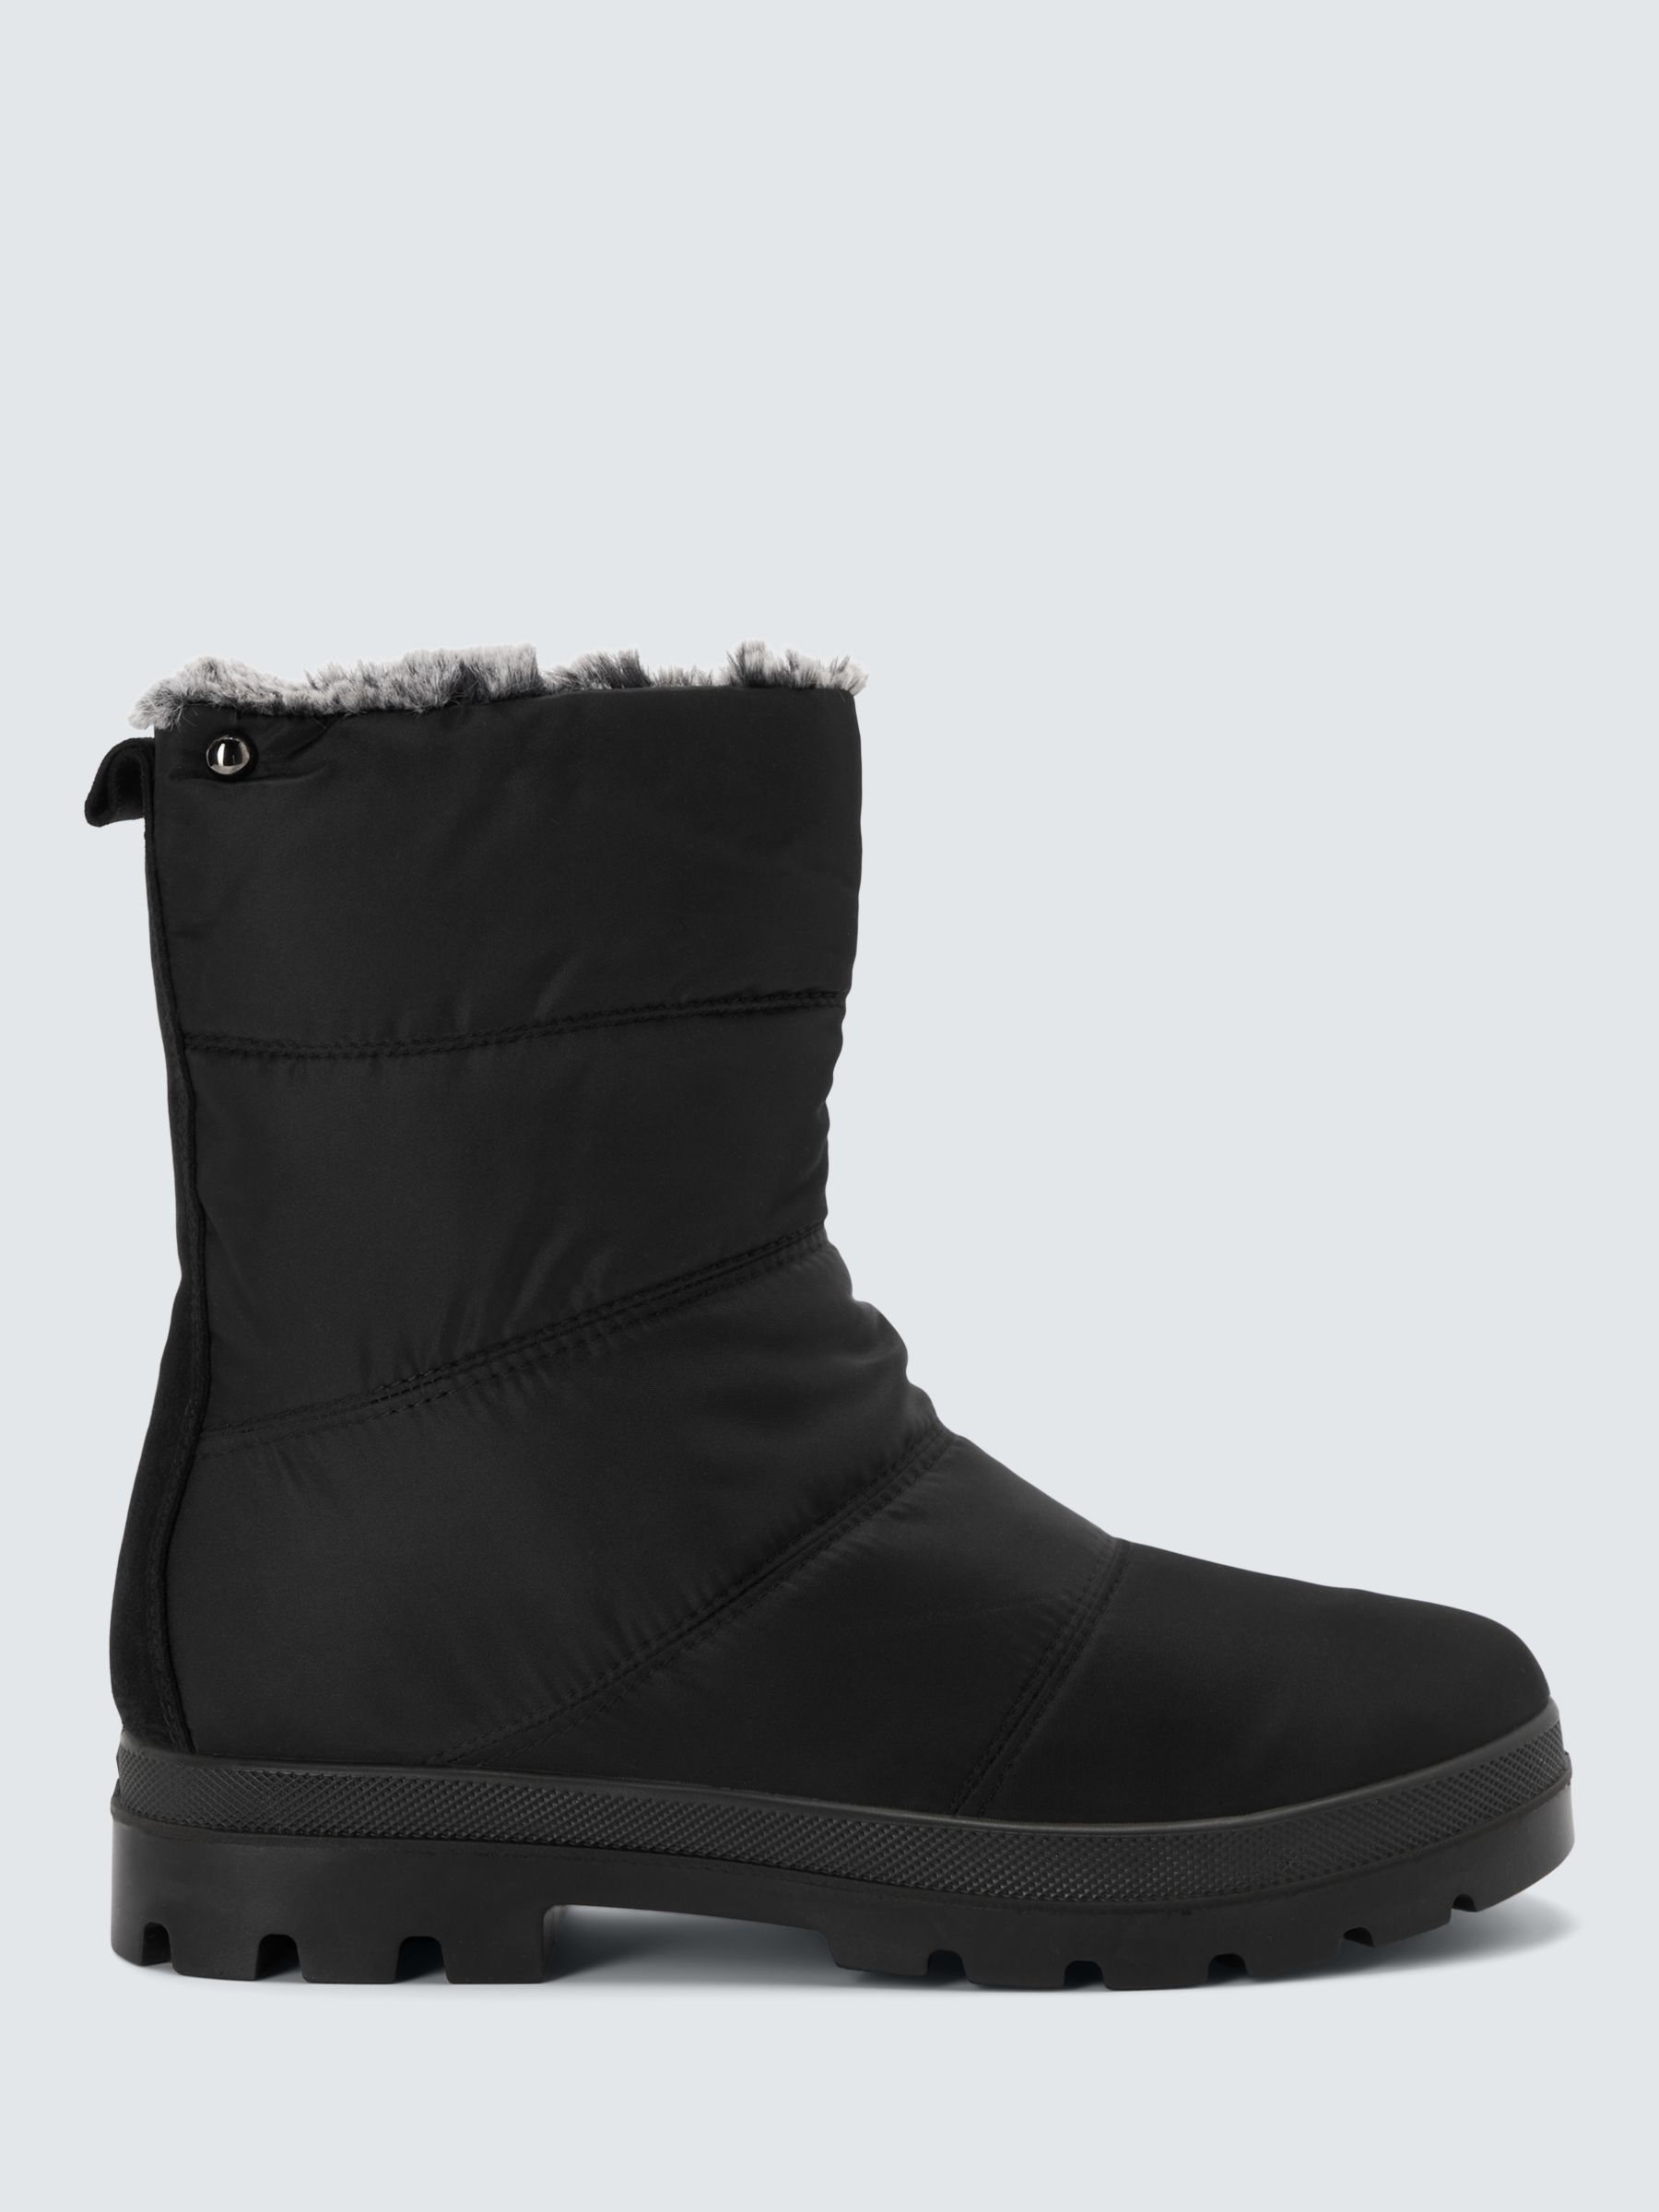 John Lewis Pattie Water Resistant Snow Boots, Black, 3